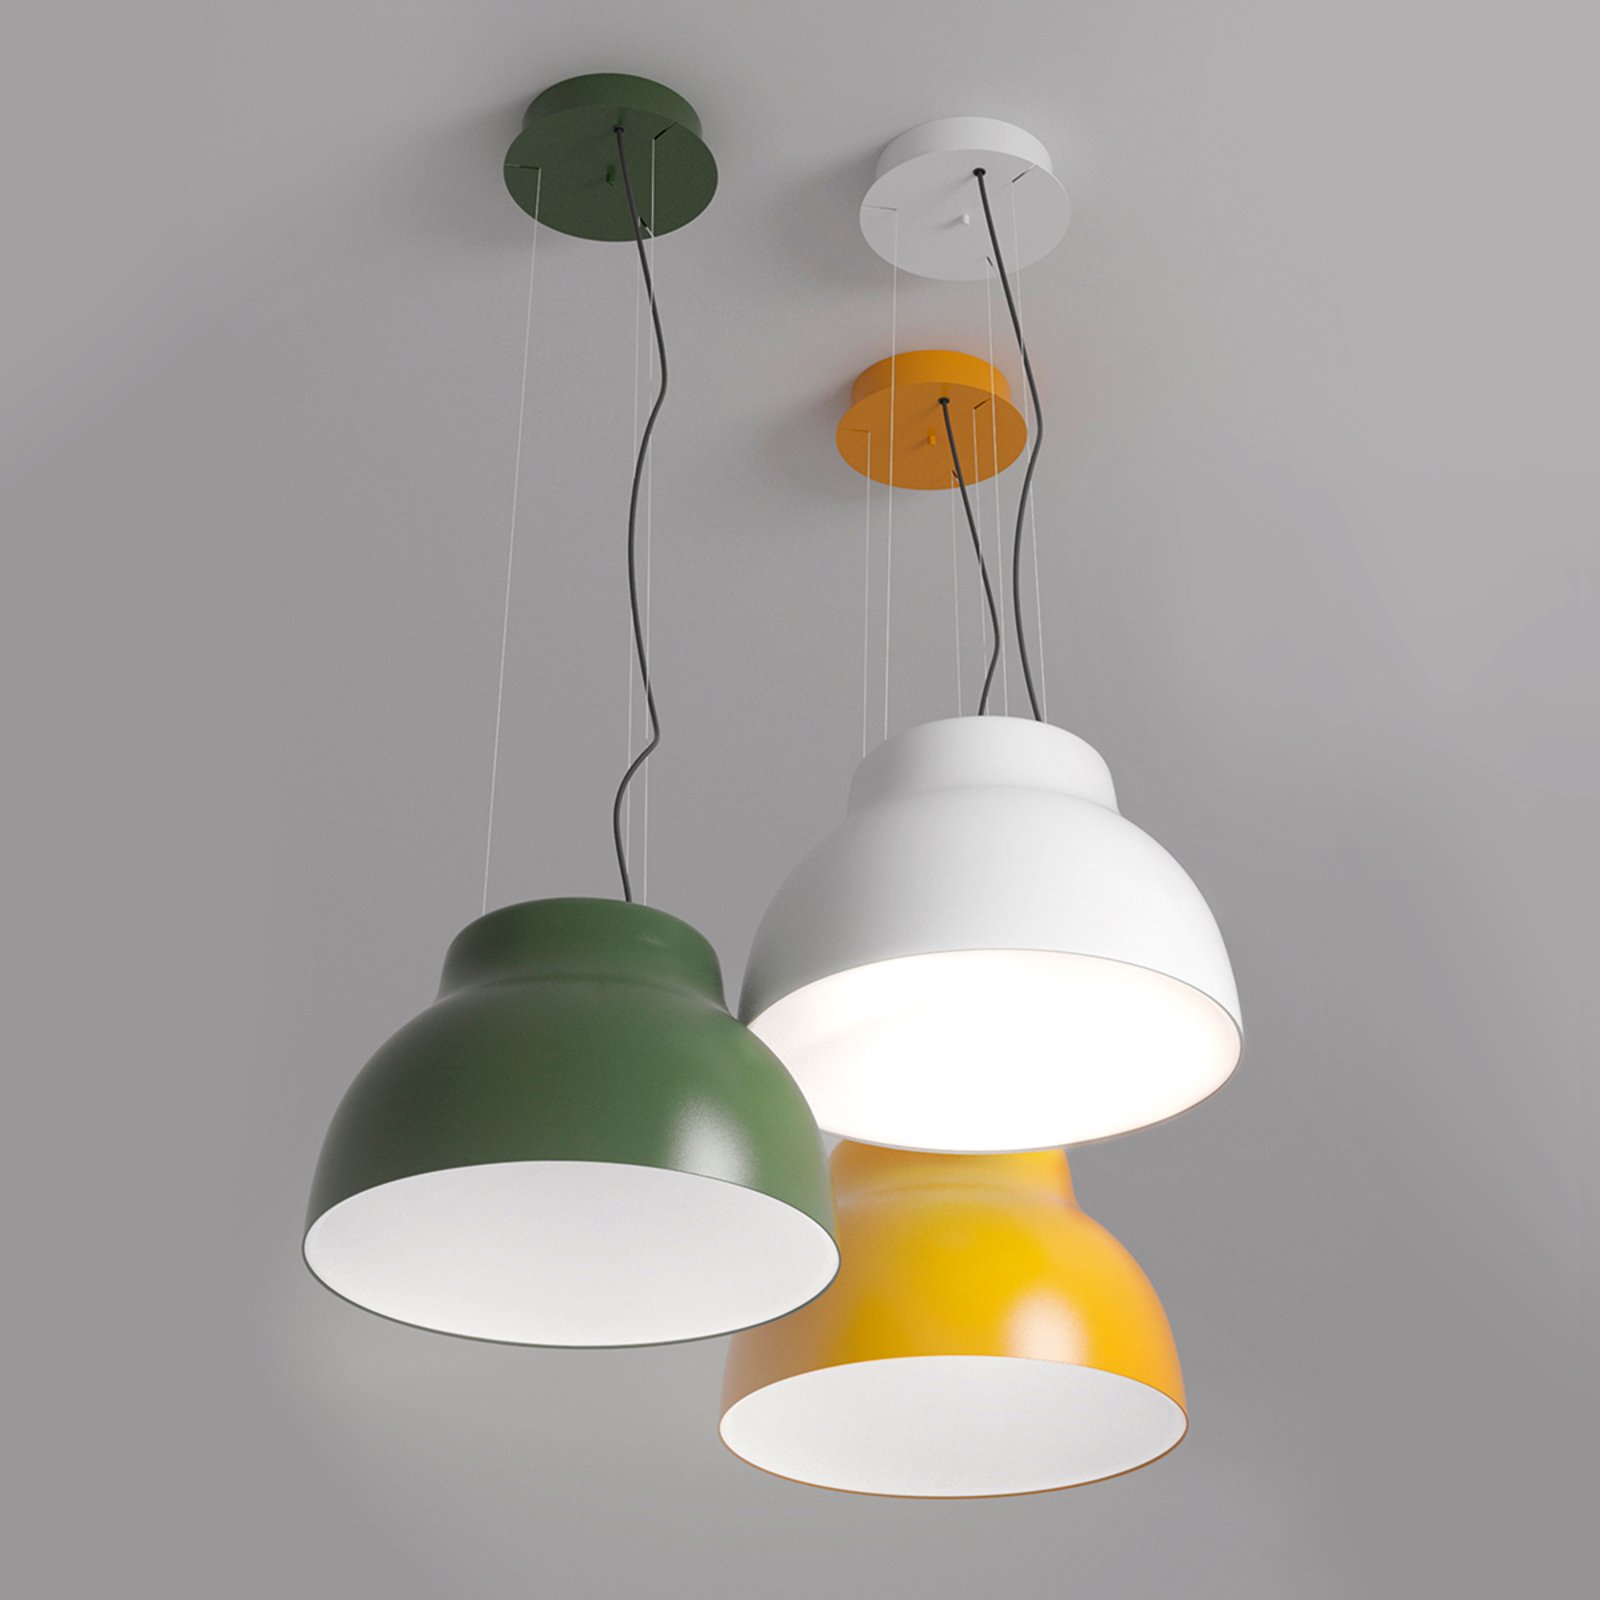 Martinelli Luce Cicala - LED hanglamp, geel